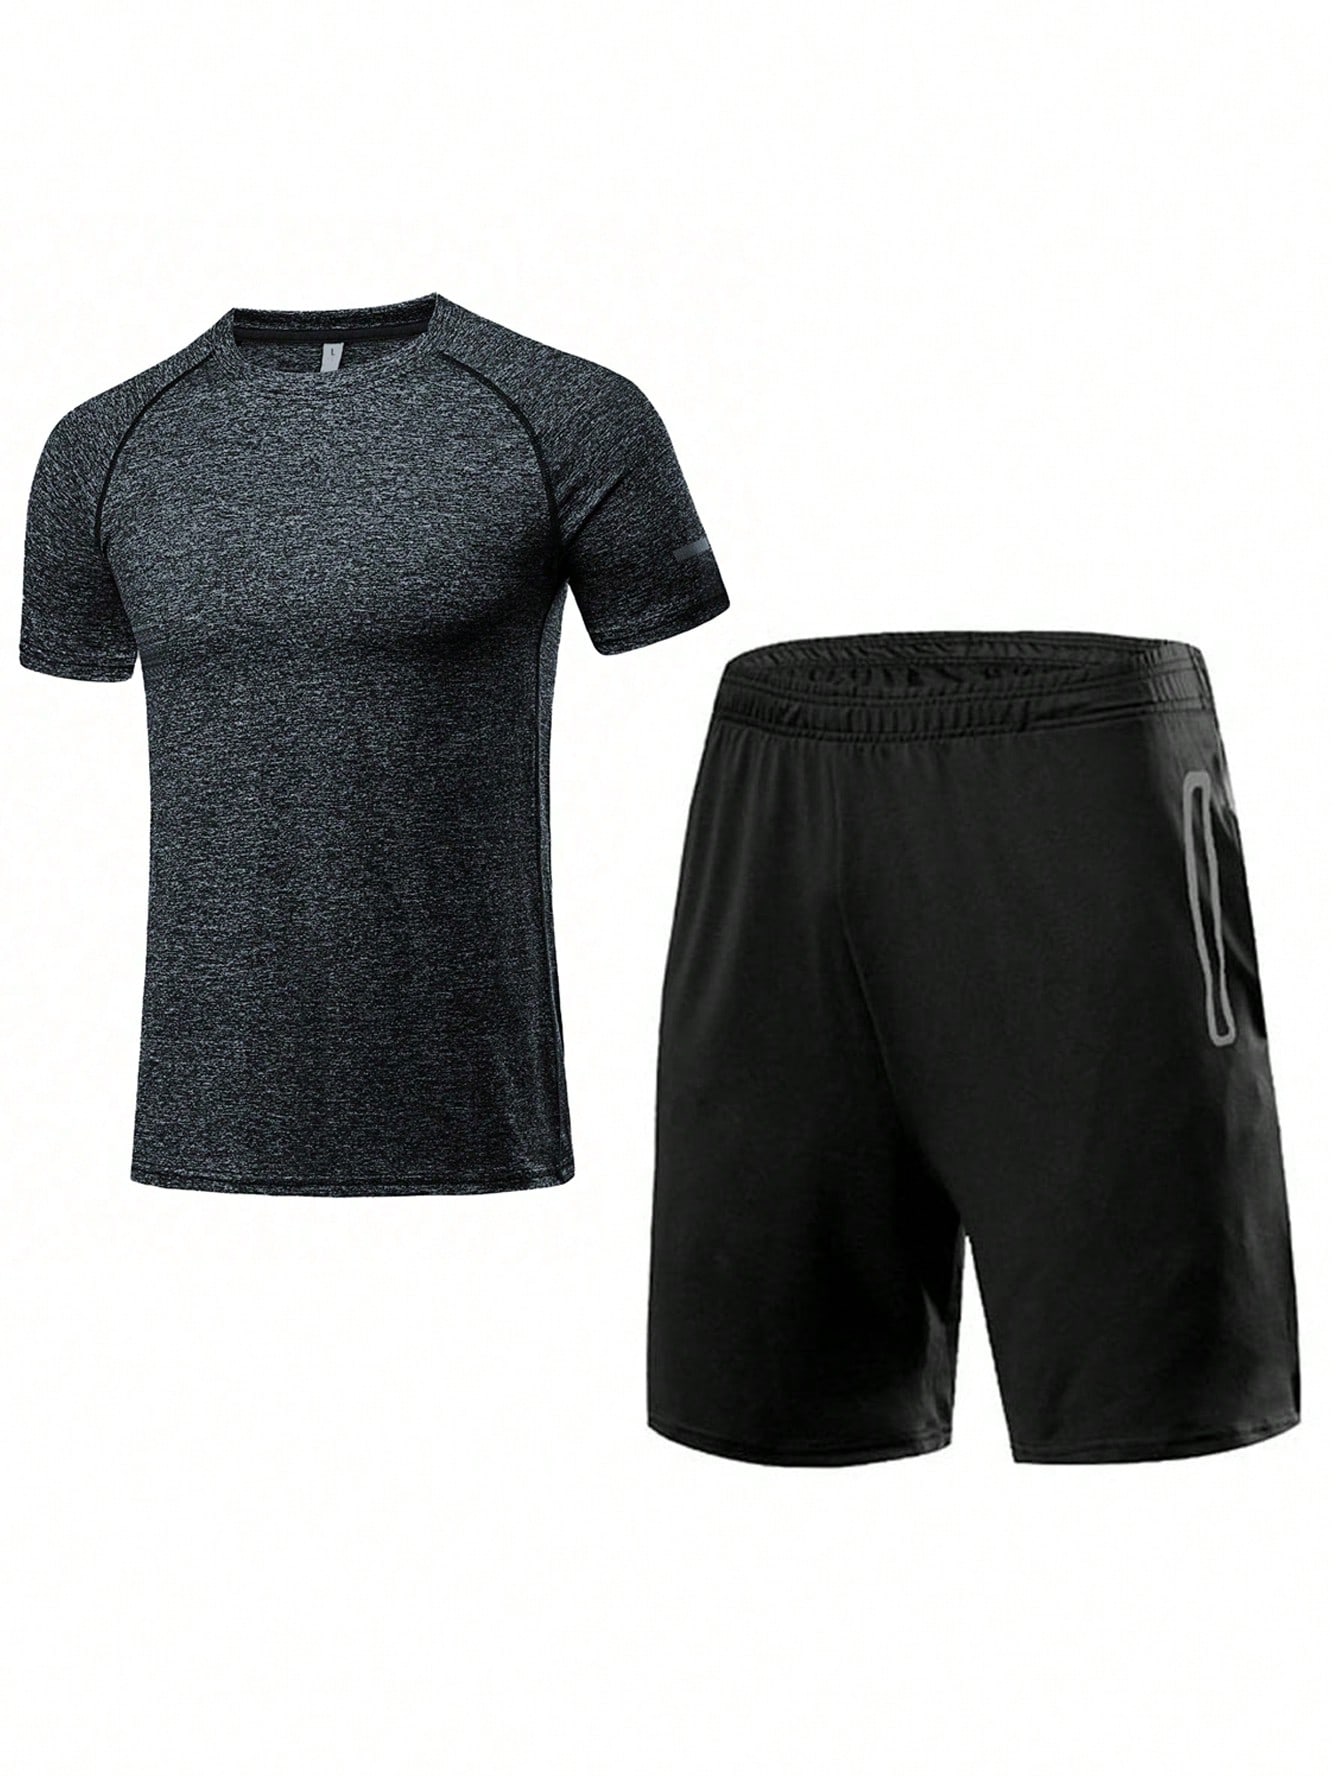 цена Летняя мужская спортивная одежда, темно-серый